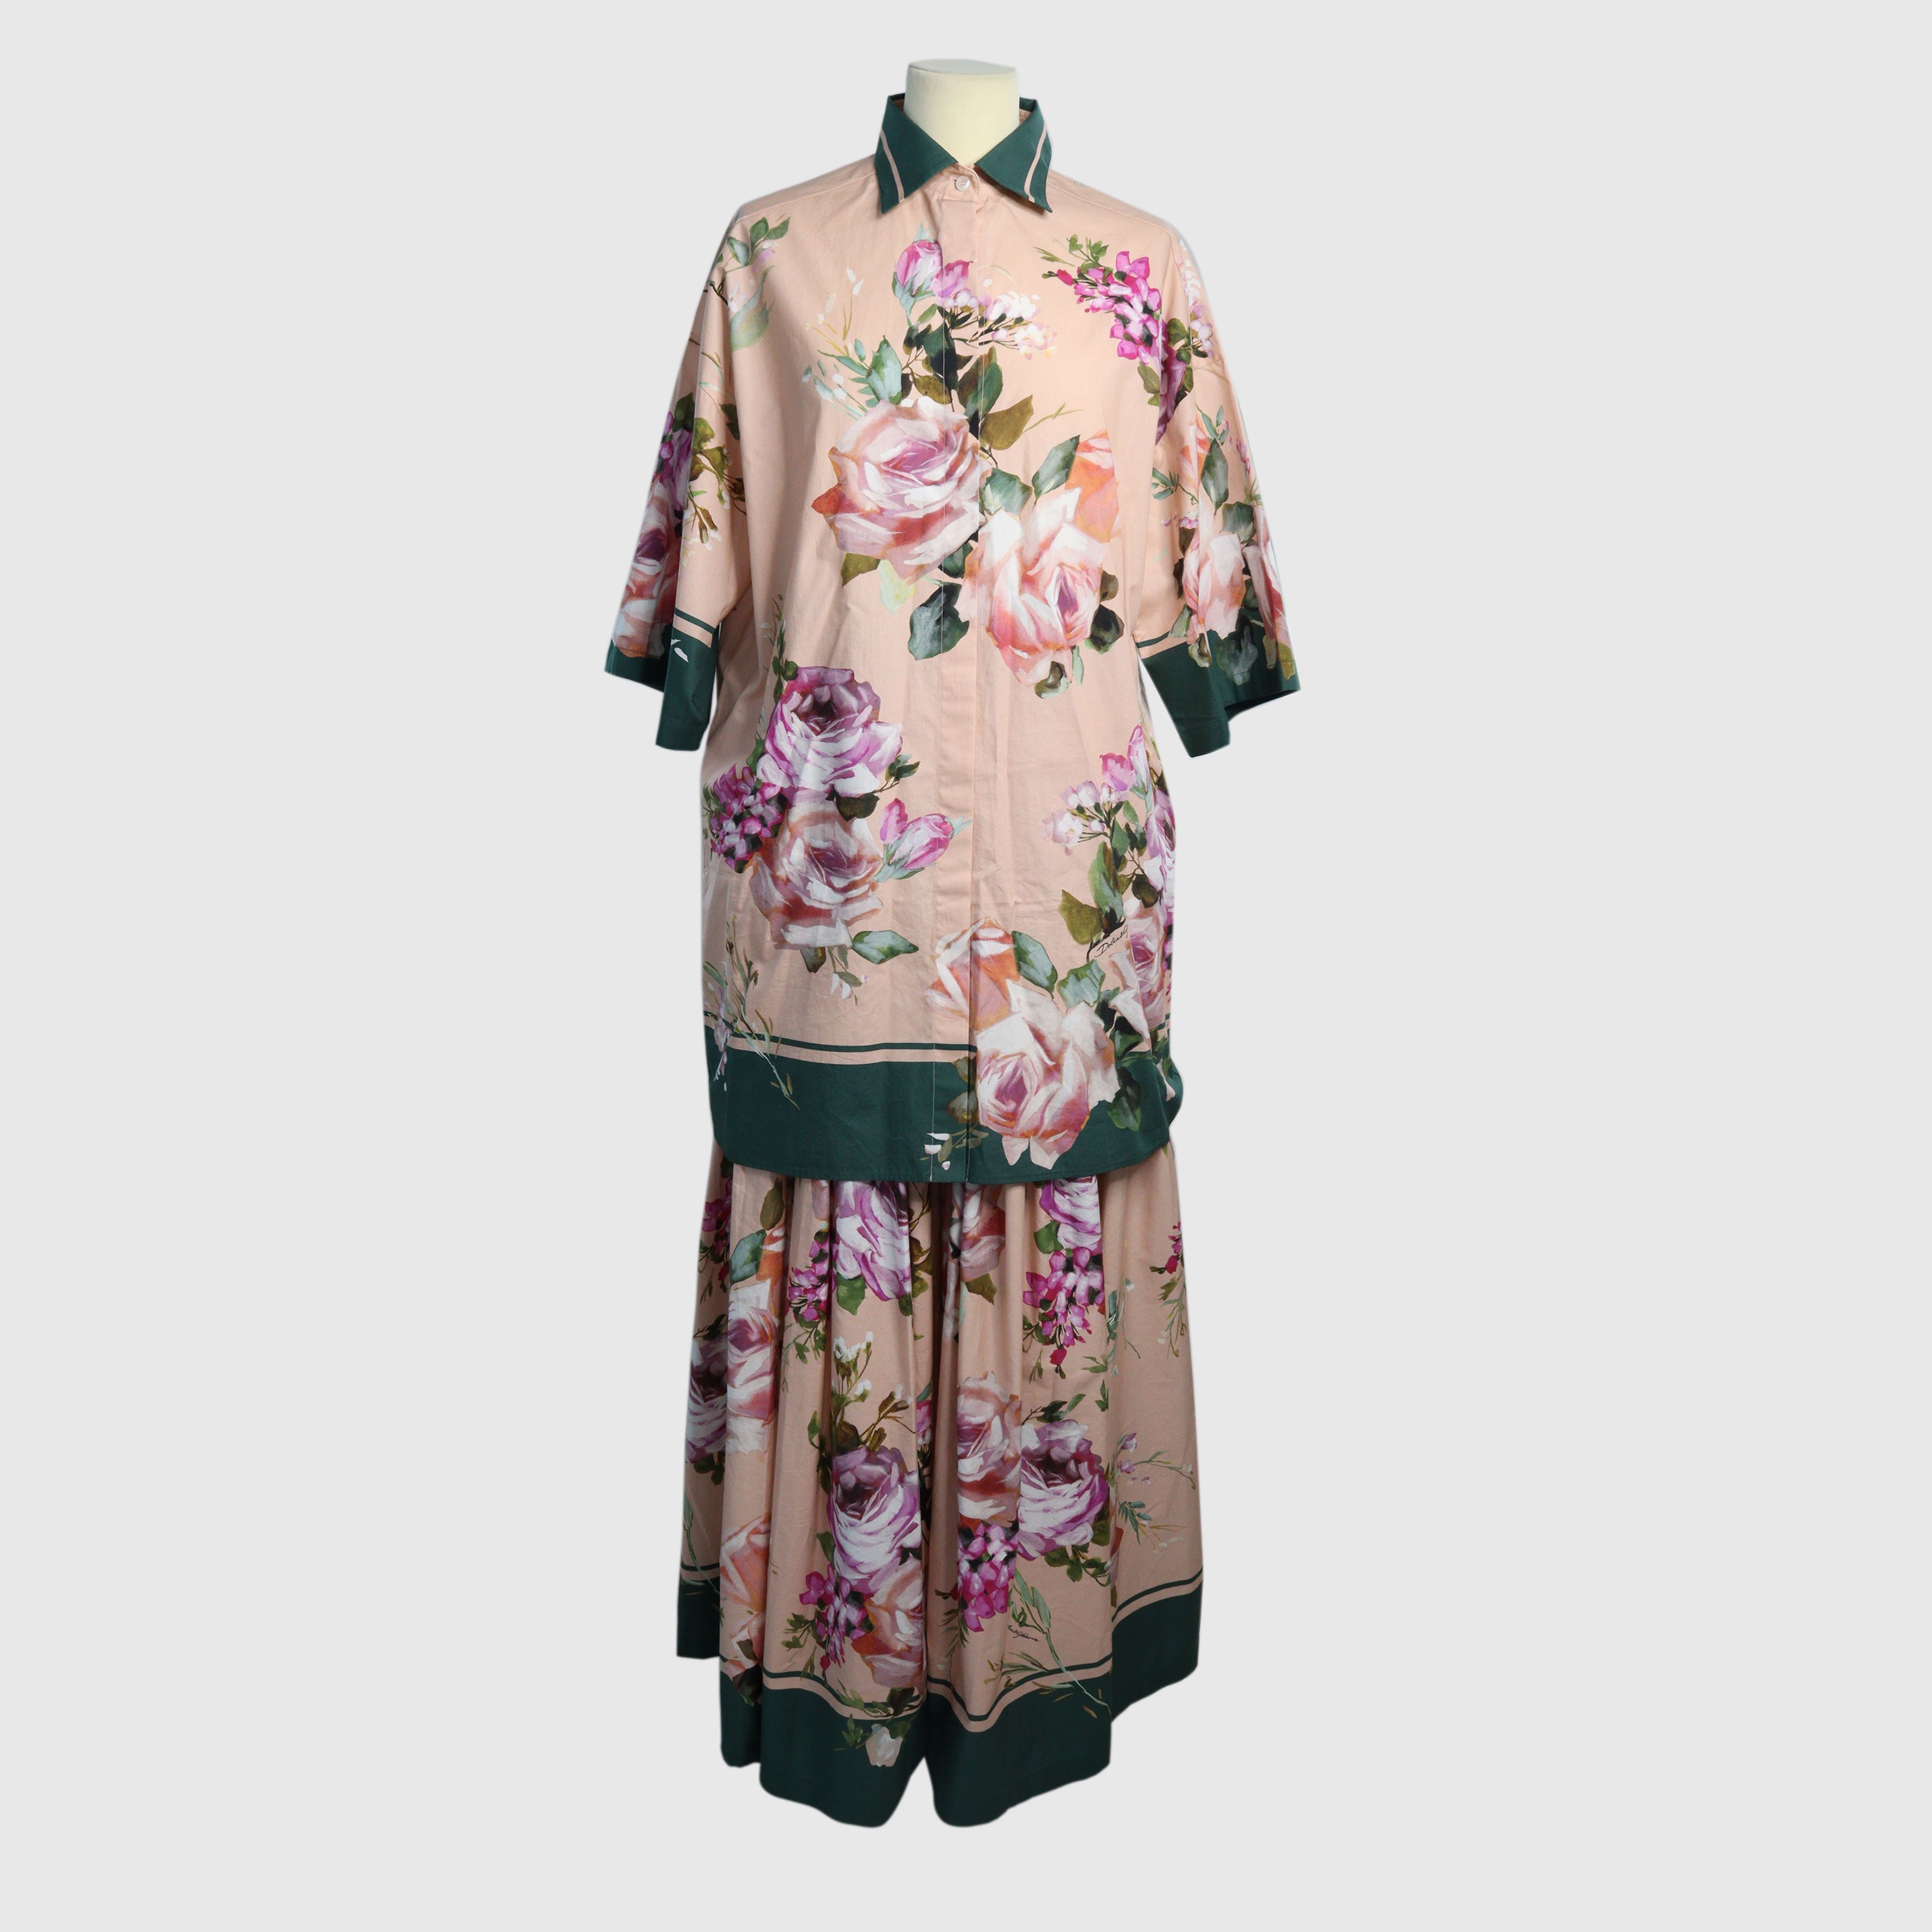 Multicolor Floral Print Top & Skirt Set Clothing Dolce & Gabbana 